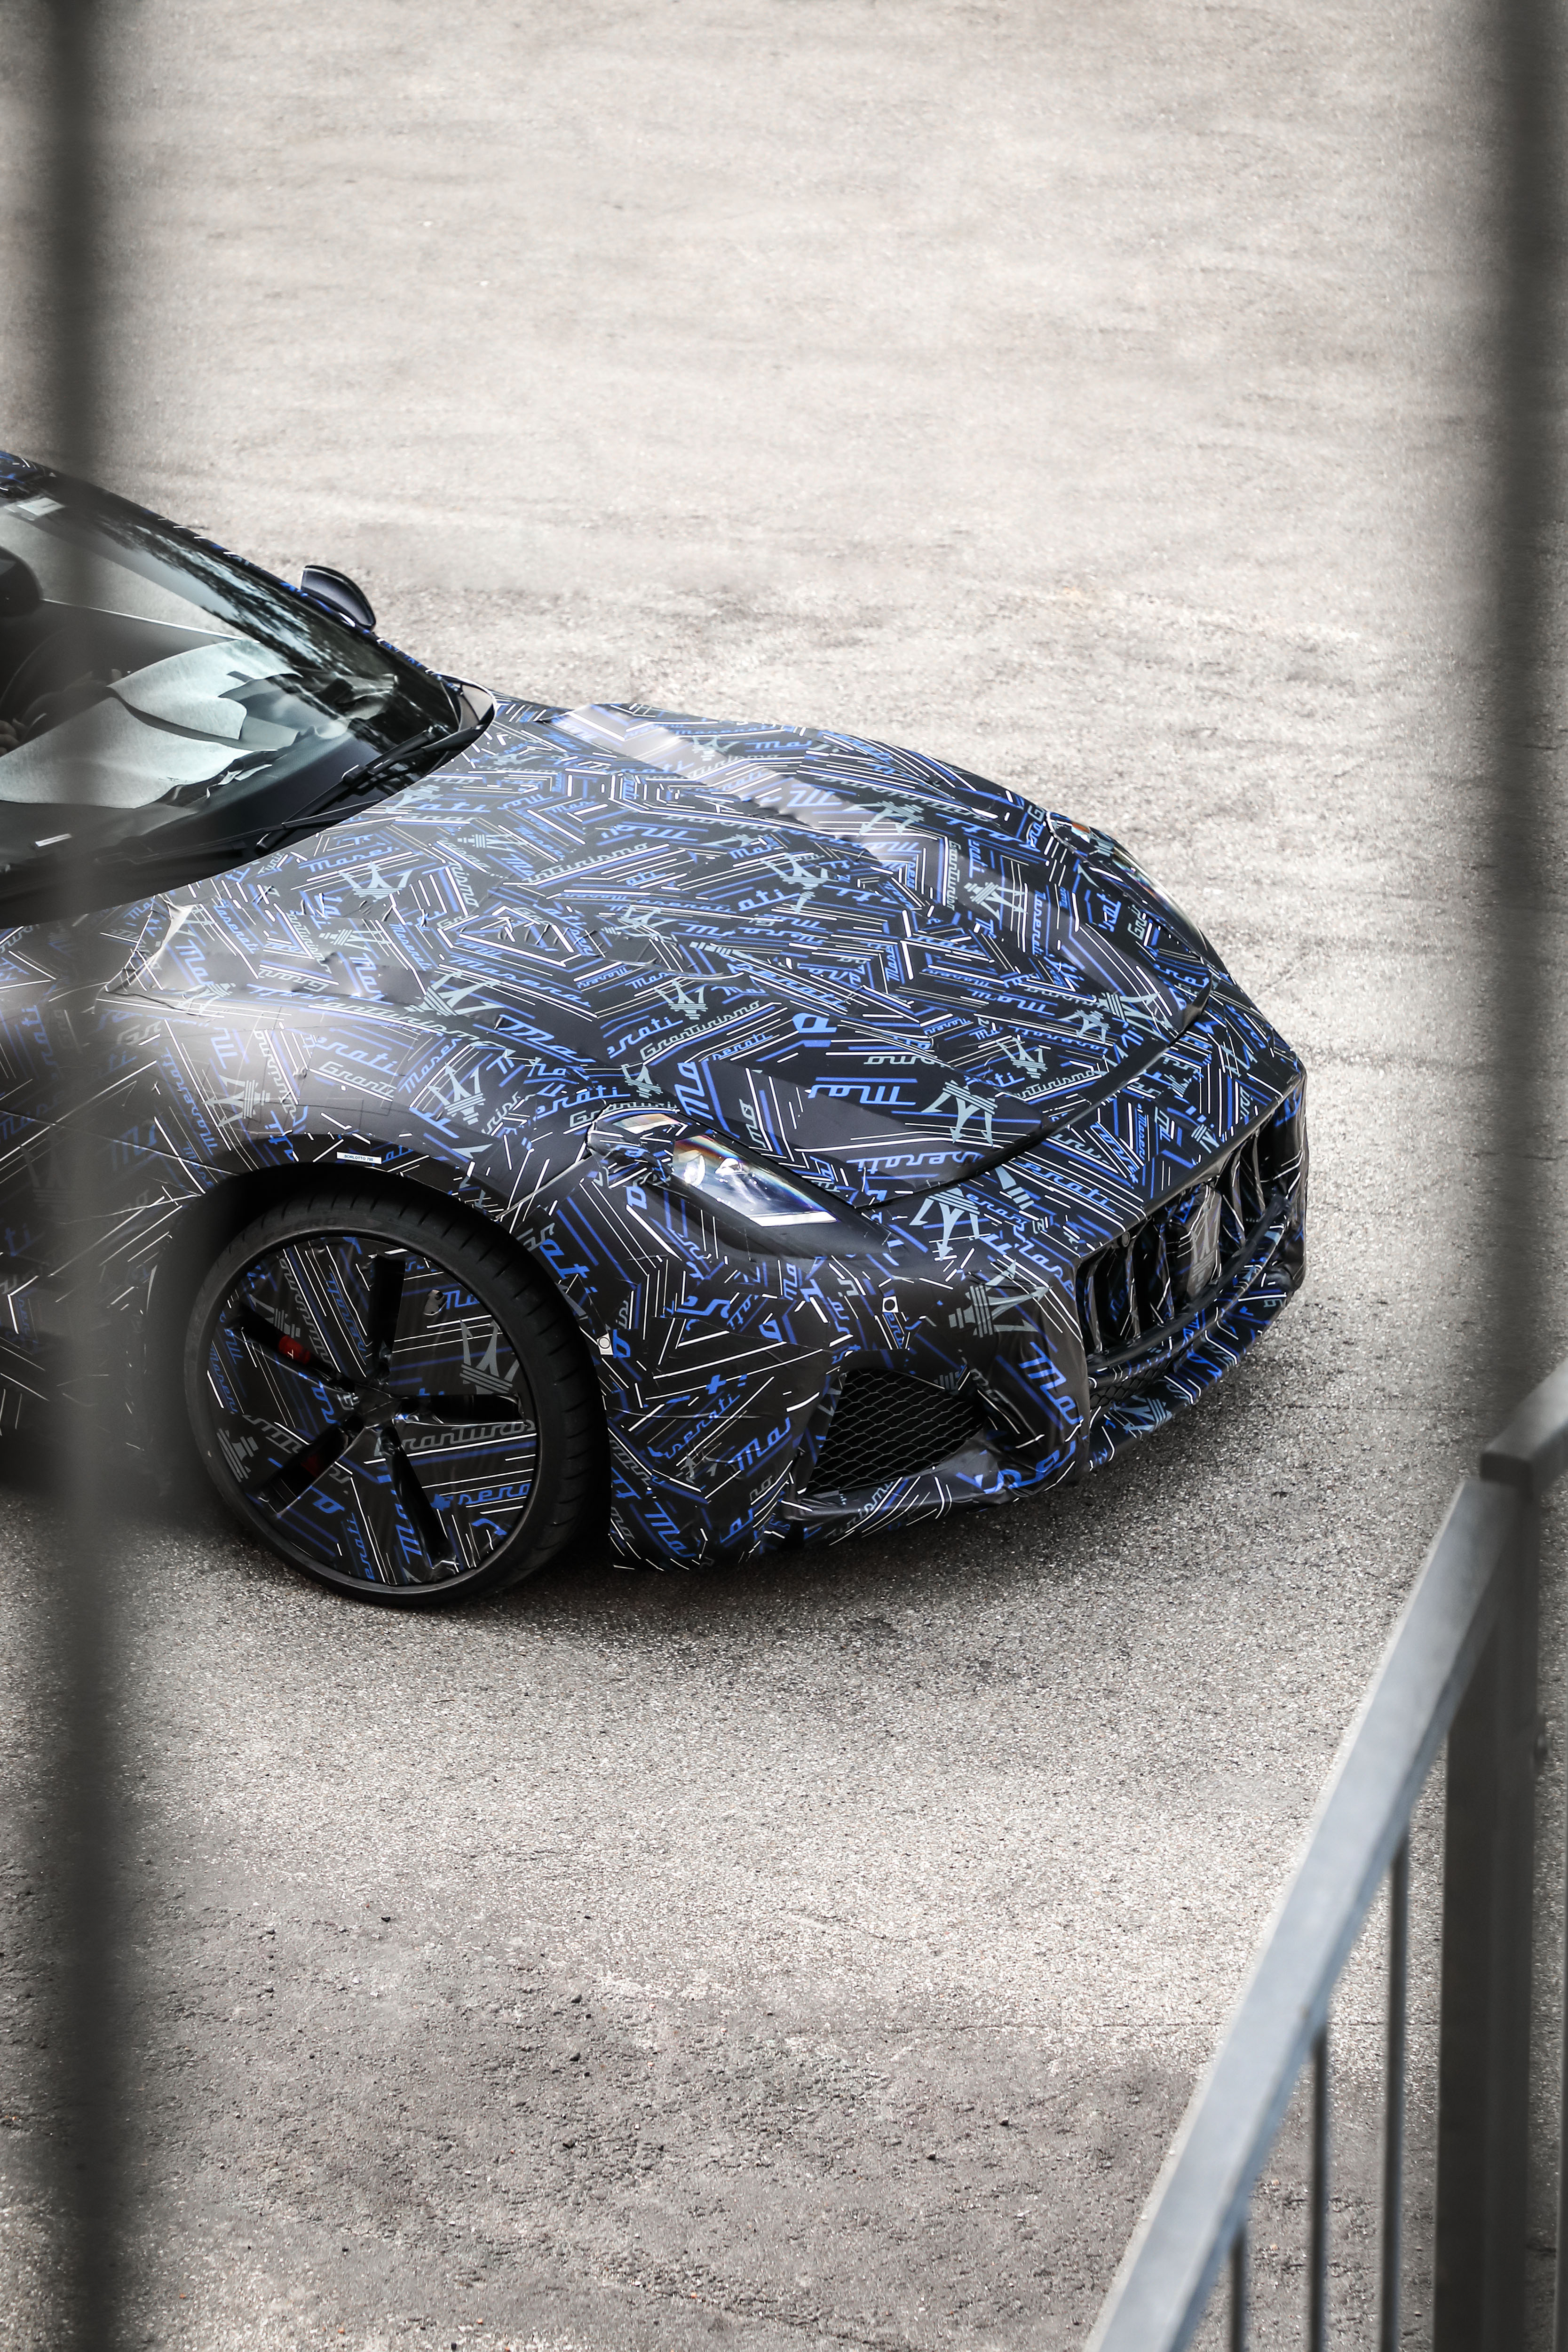 Maserati's GranTurismo clad in camouflage